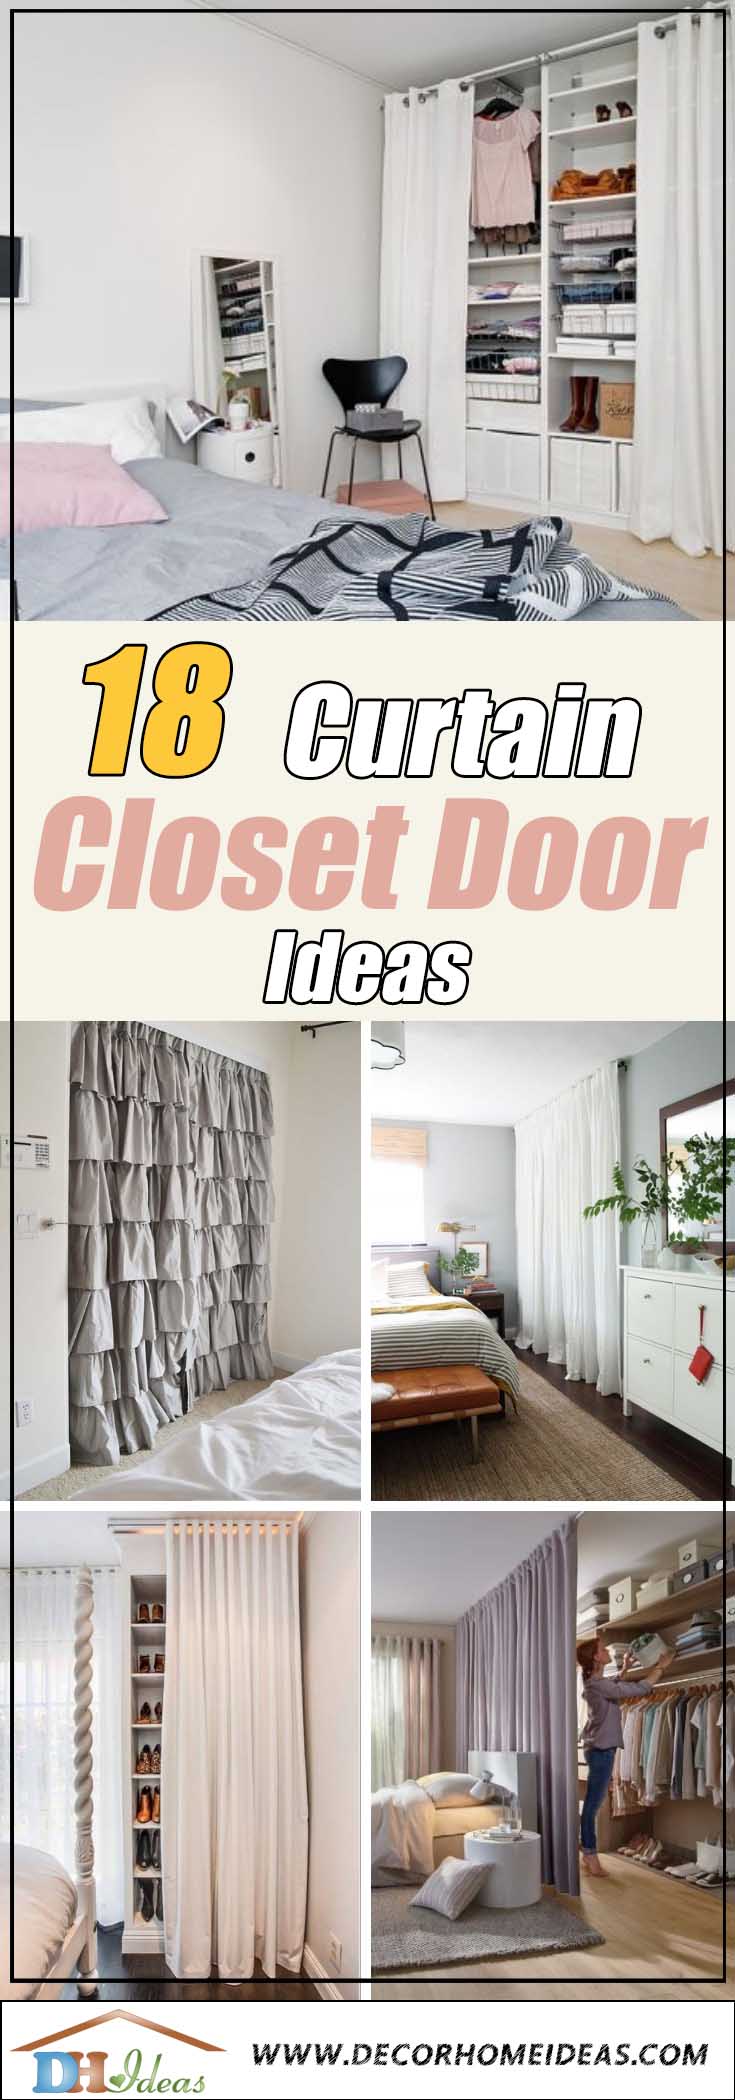 18 Tidy Curtain Closet Doors To Conquer The Mess